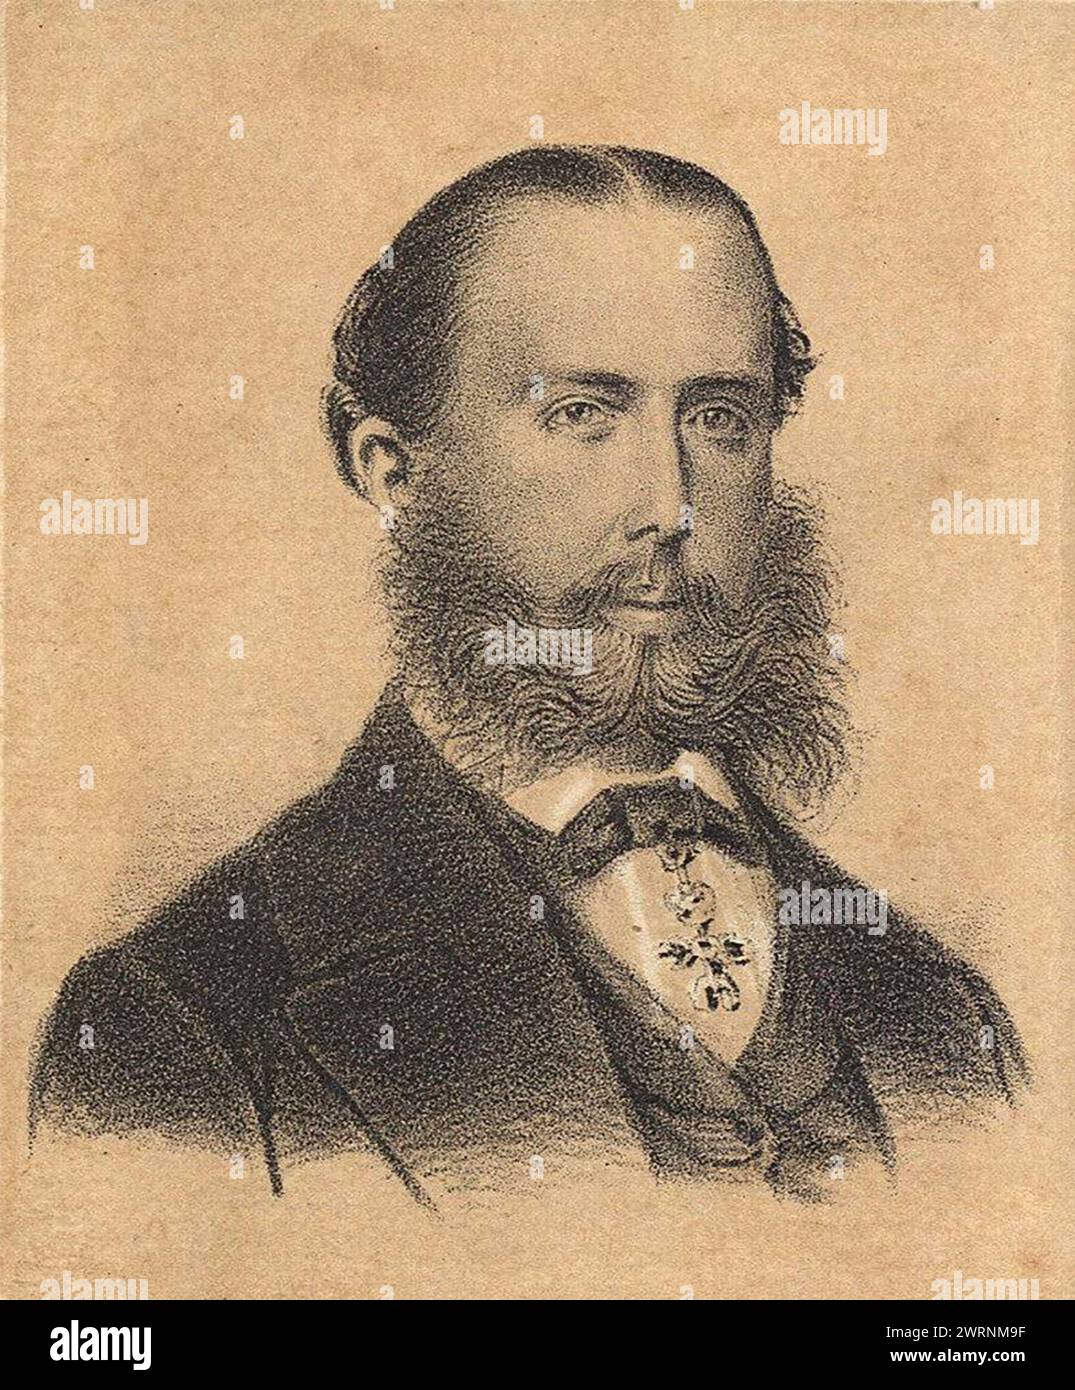 Zeichnung (Lithografie) von Ferdinand Maximilian Joseph oder Maximilian I., Kaiser von Mexiko ca. 1867 Stockfoto